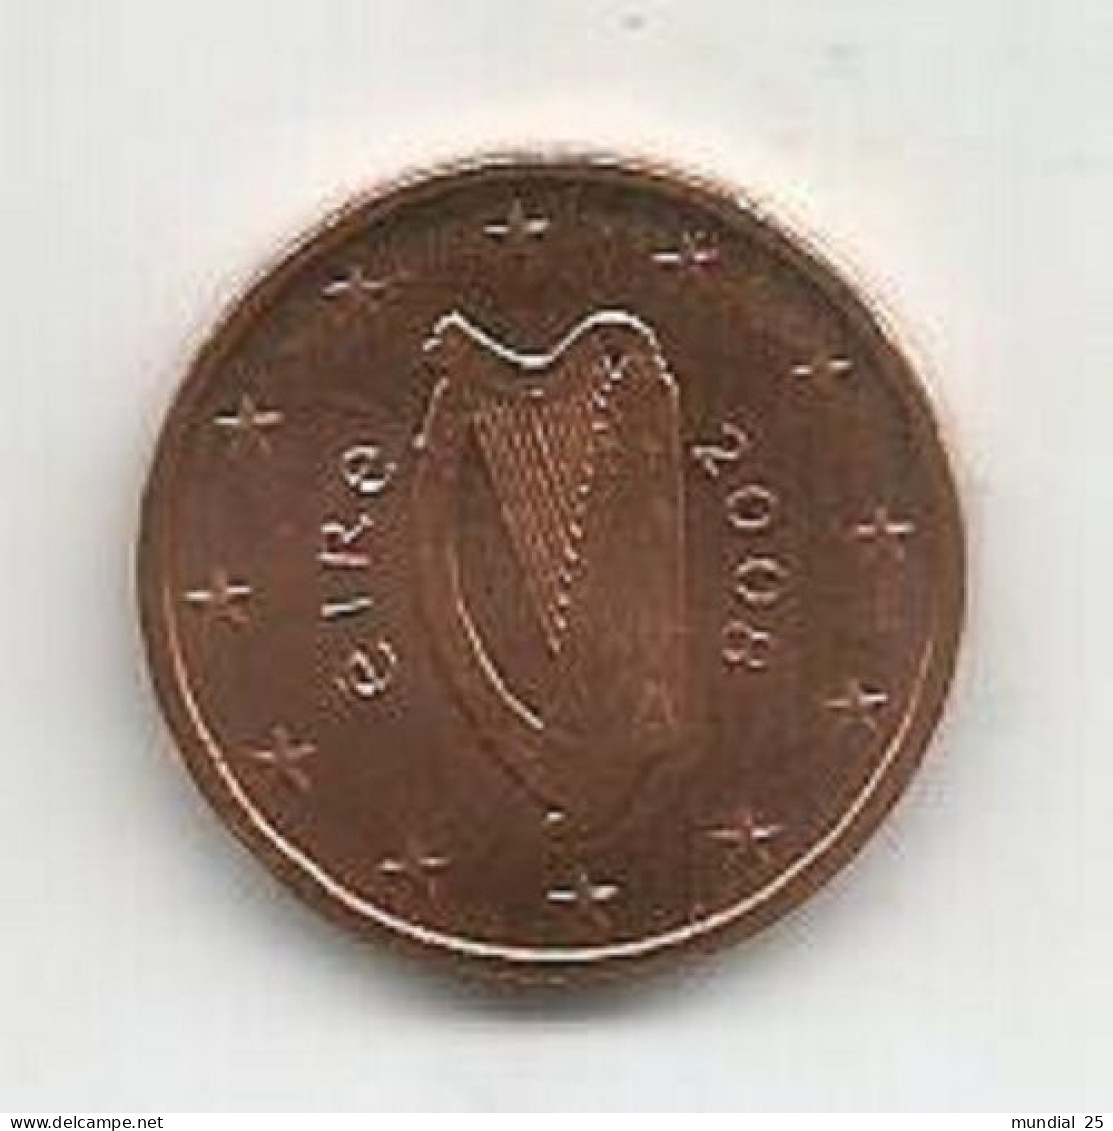 IRELAND 2 EURO CENT 2008 - Ierland